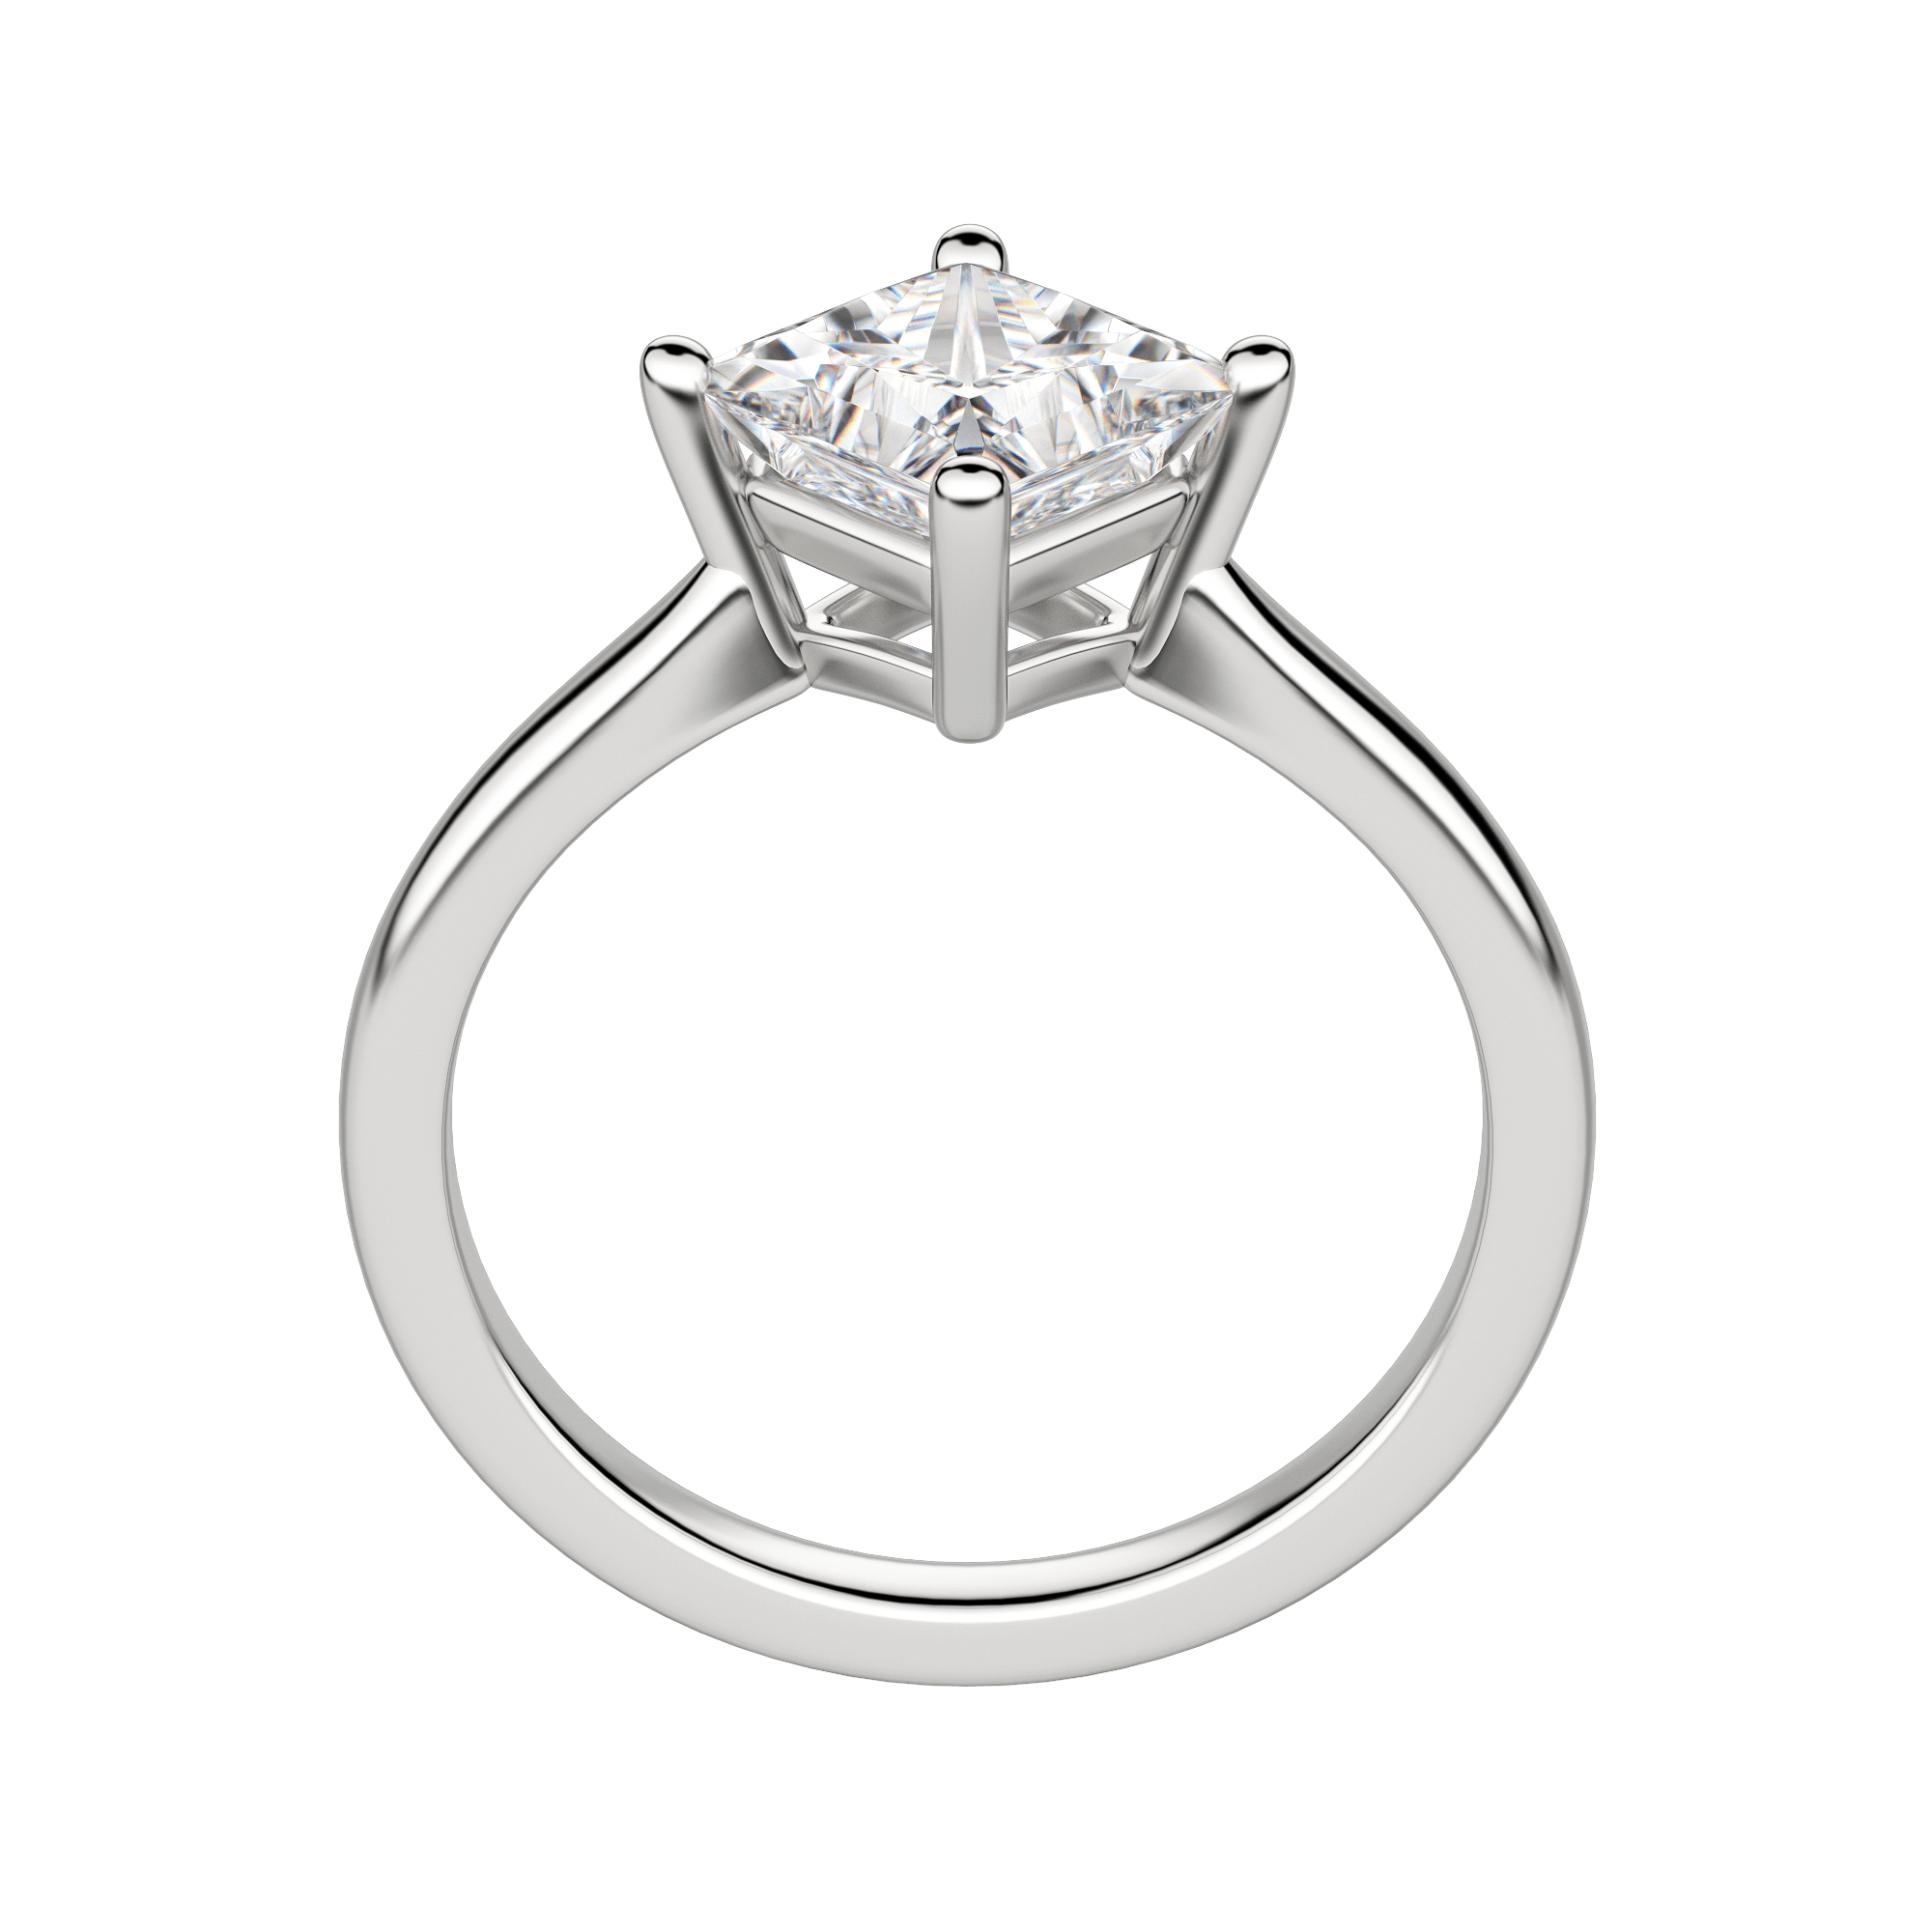 Eave Kite Princess Cut Engagement Ring, 18K White Gold, Platinum, Hover, 